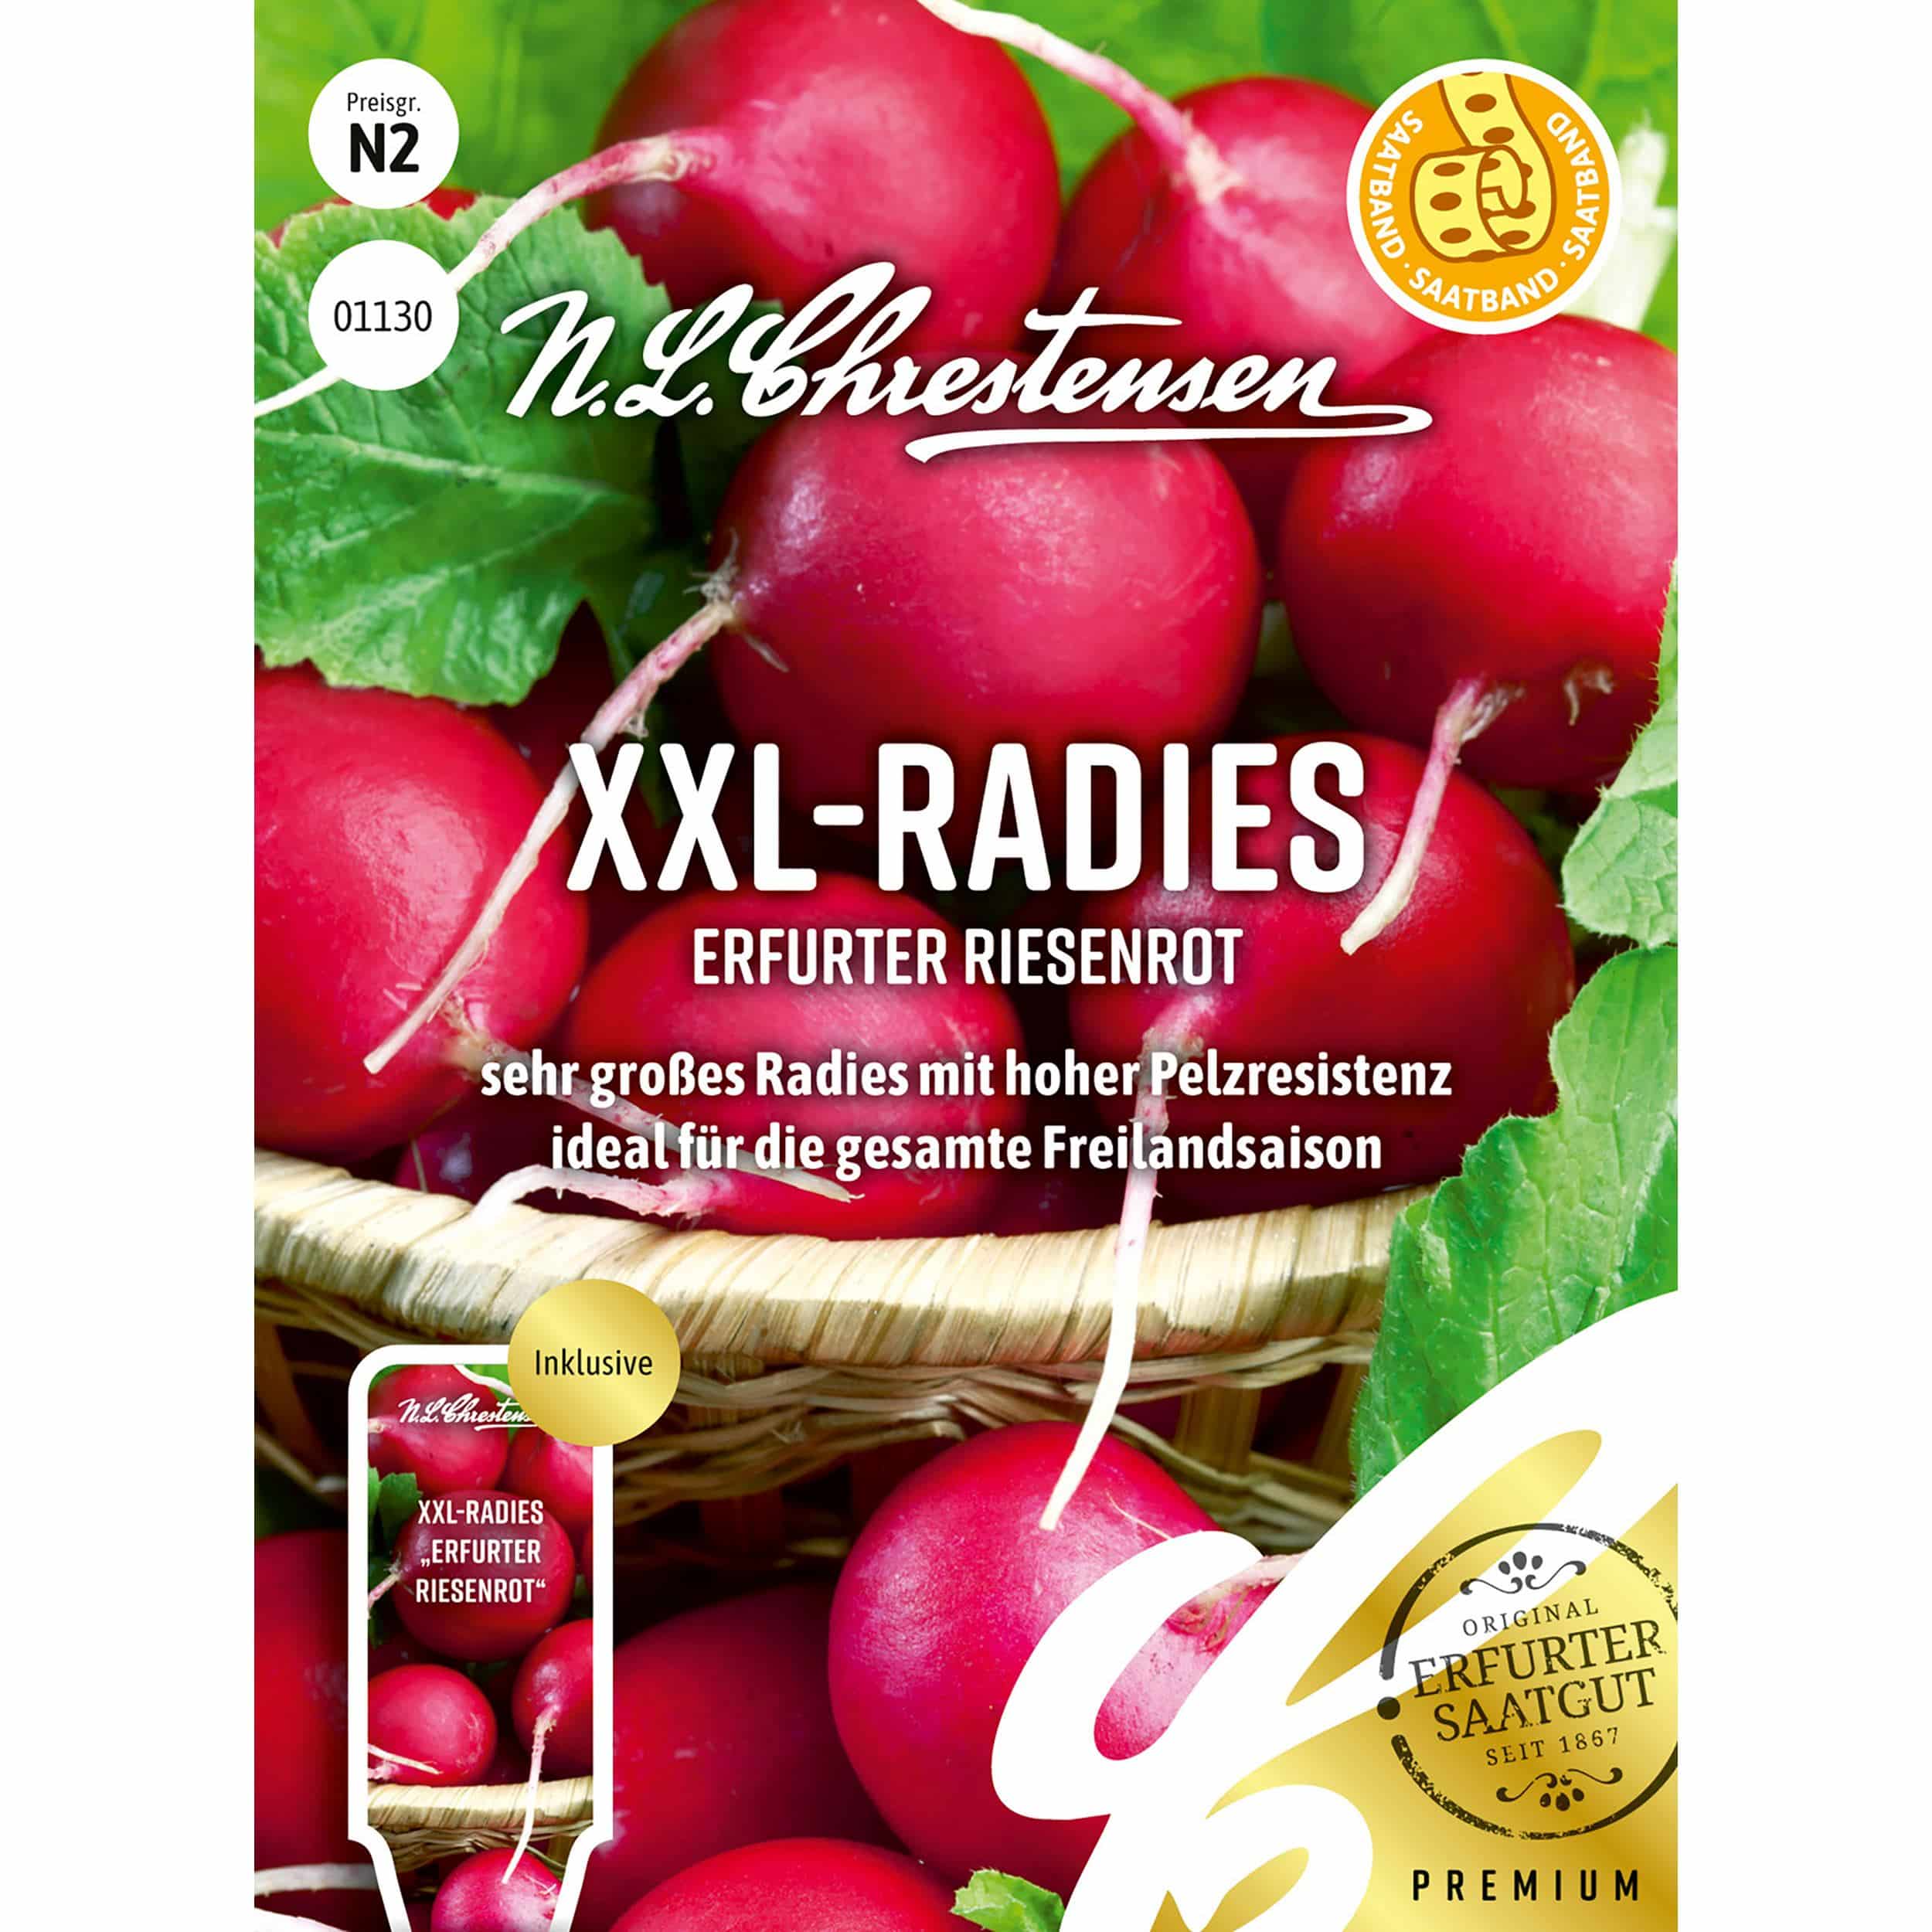 XXL-
Radies Erfurter Riesenrot